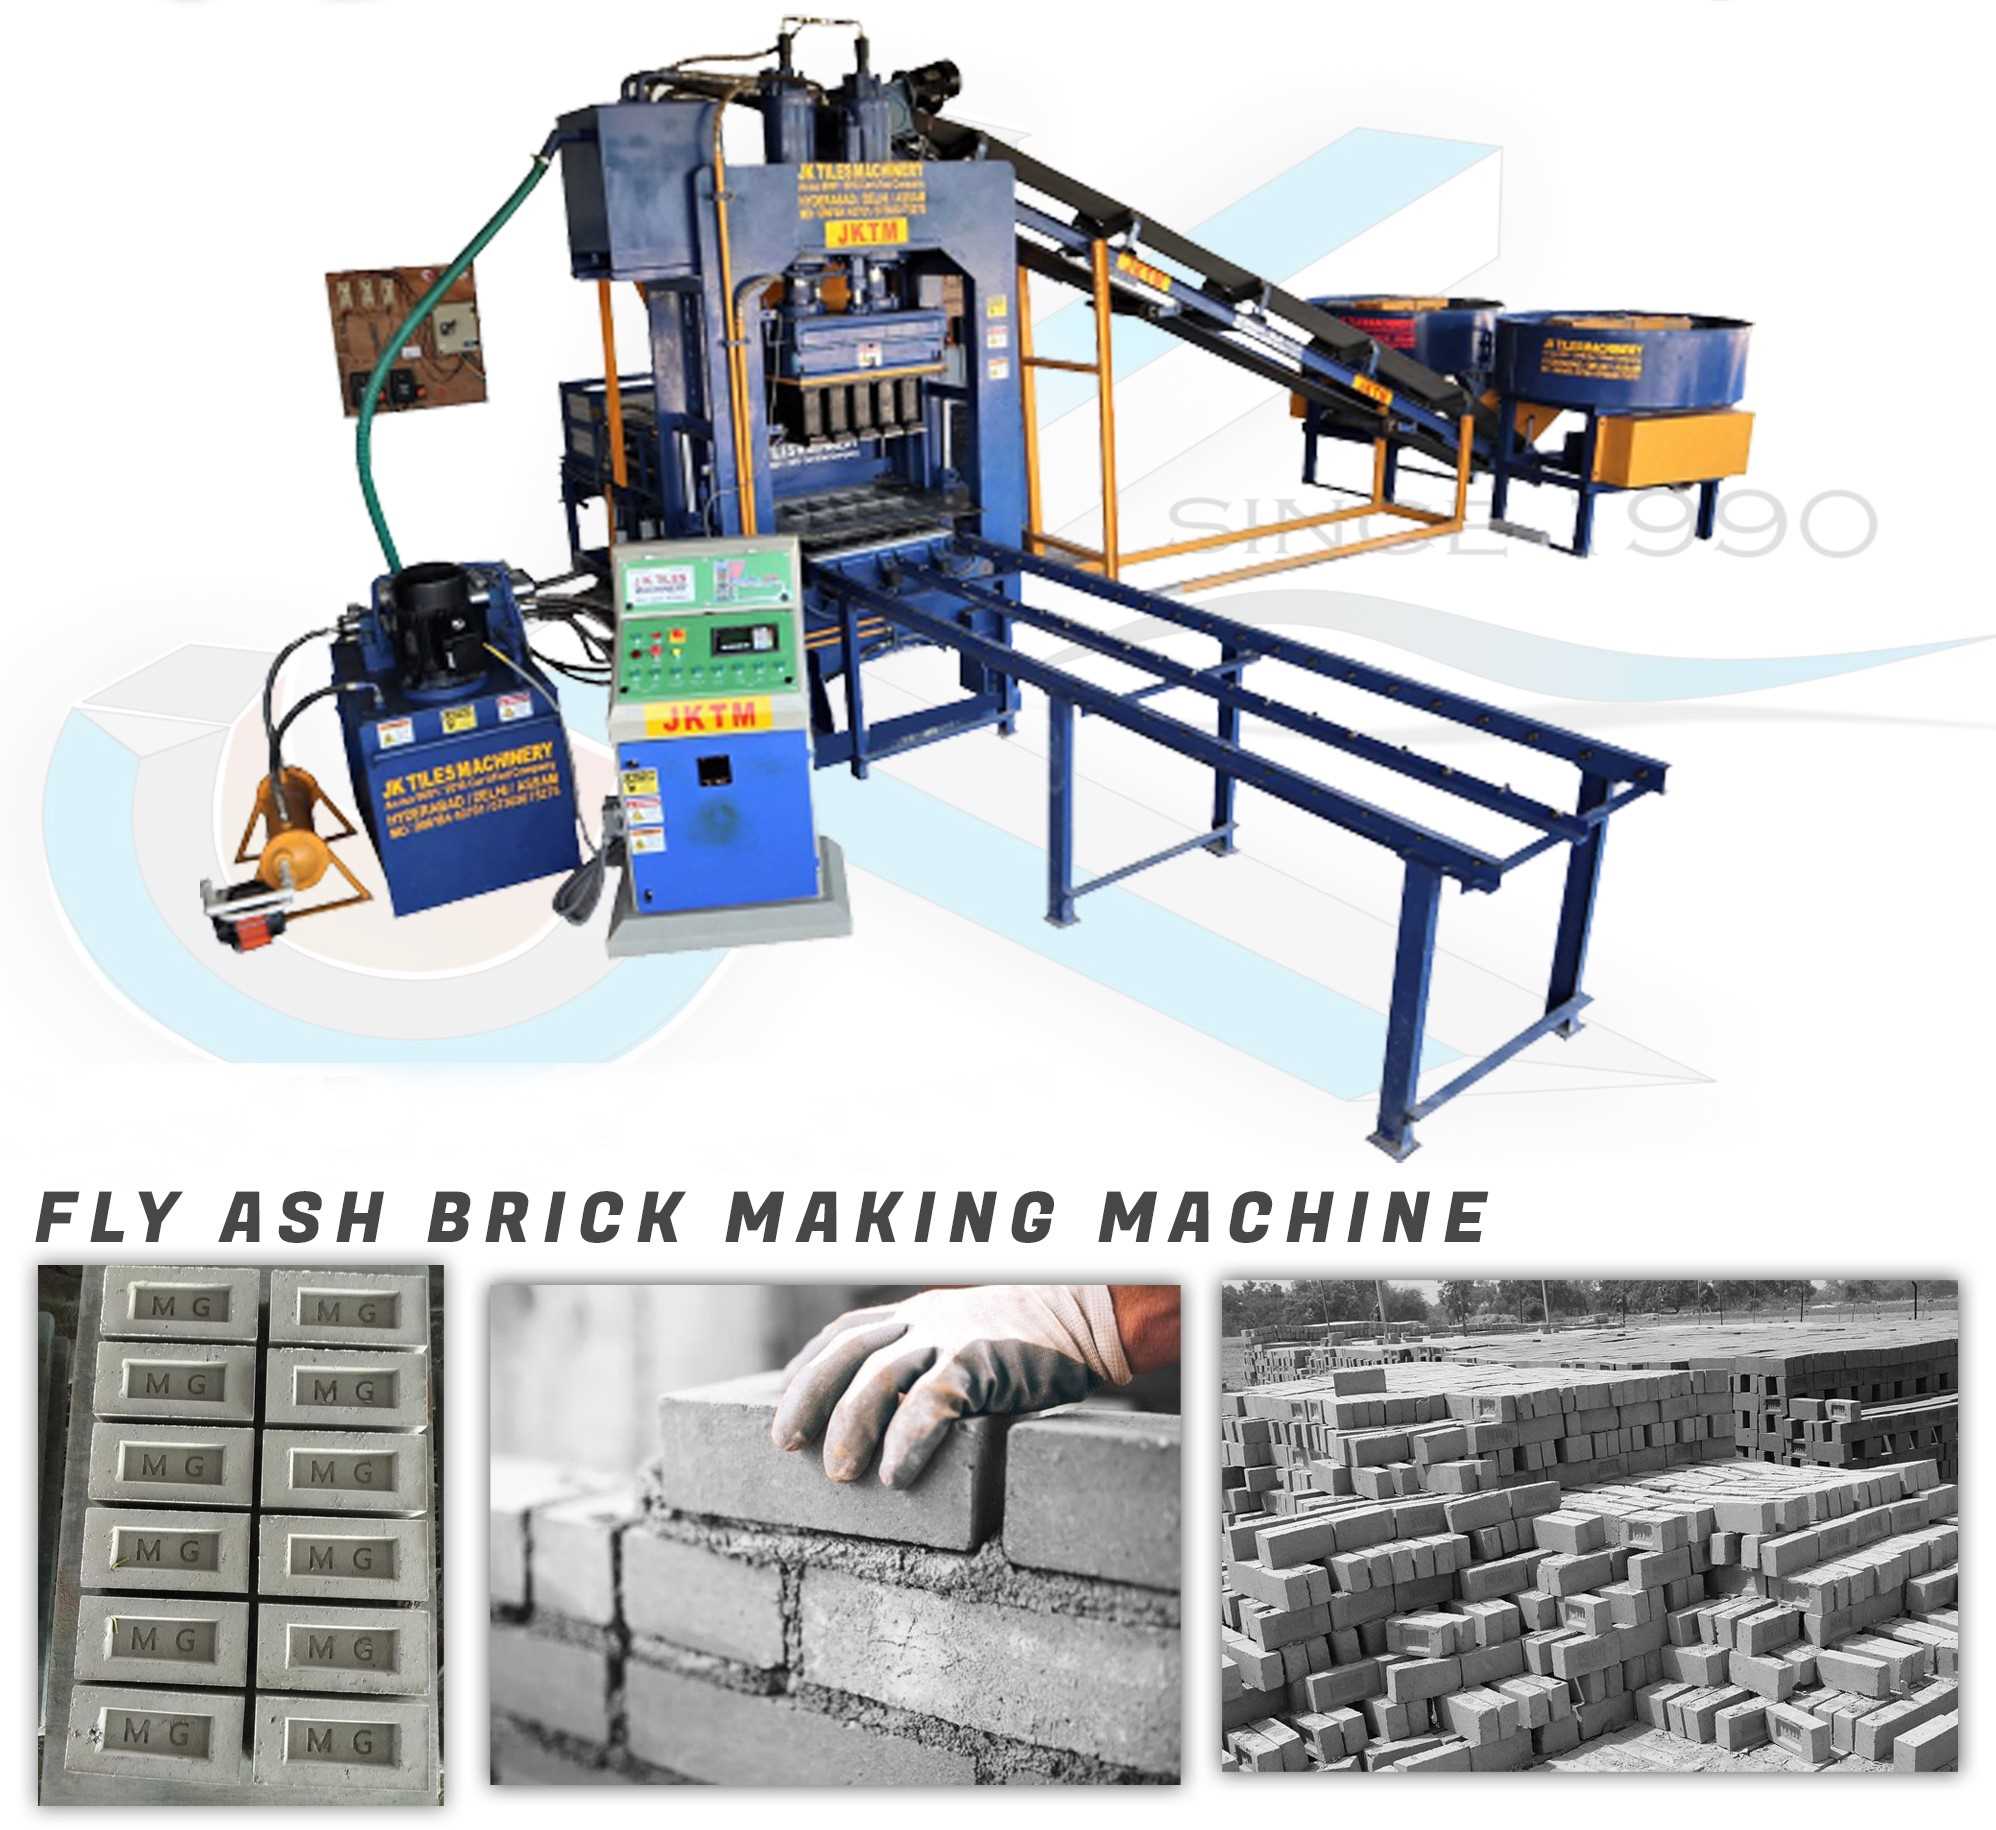 Fly ash brick making machine 